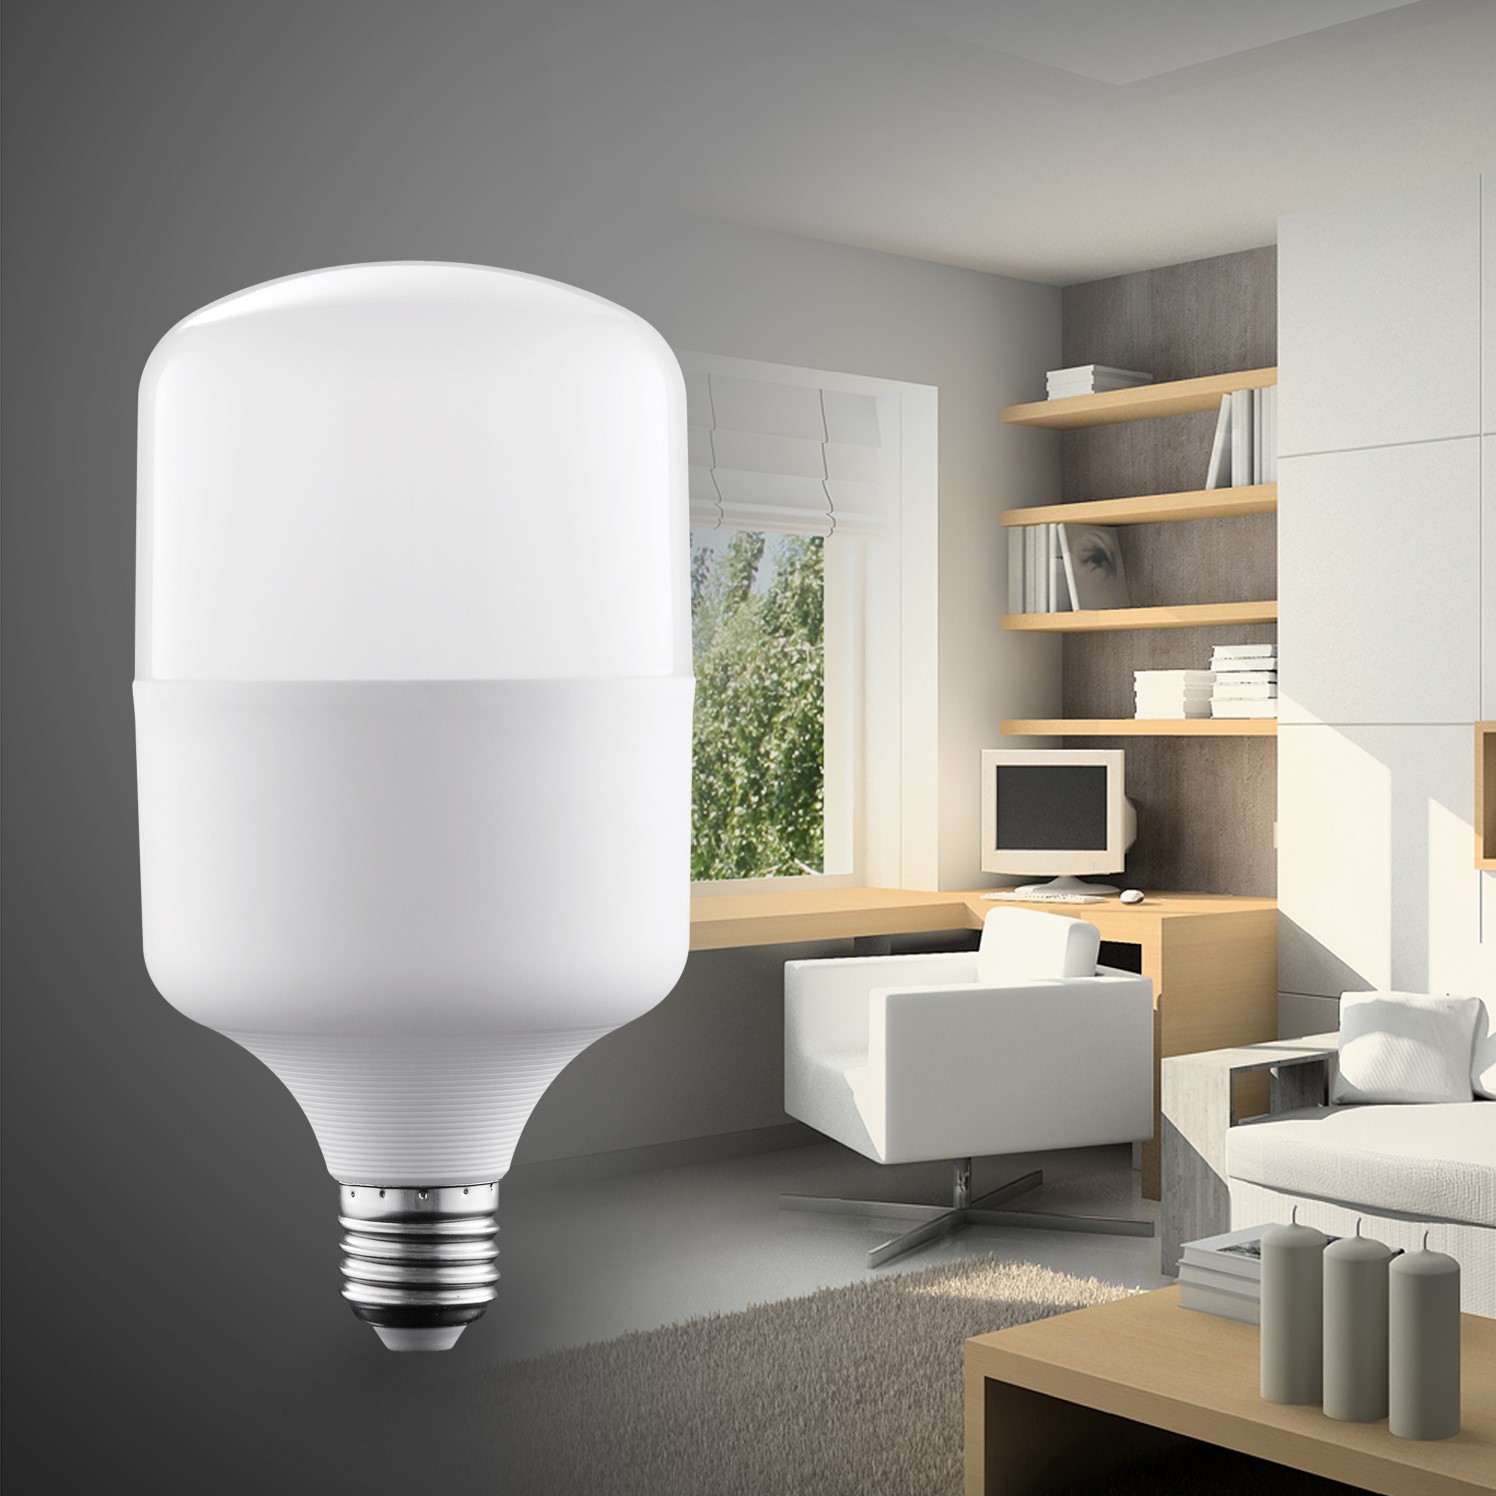 LED indoor household plastic clad aluminum lamp body without stroboscopic bulb lamp